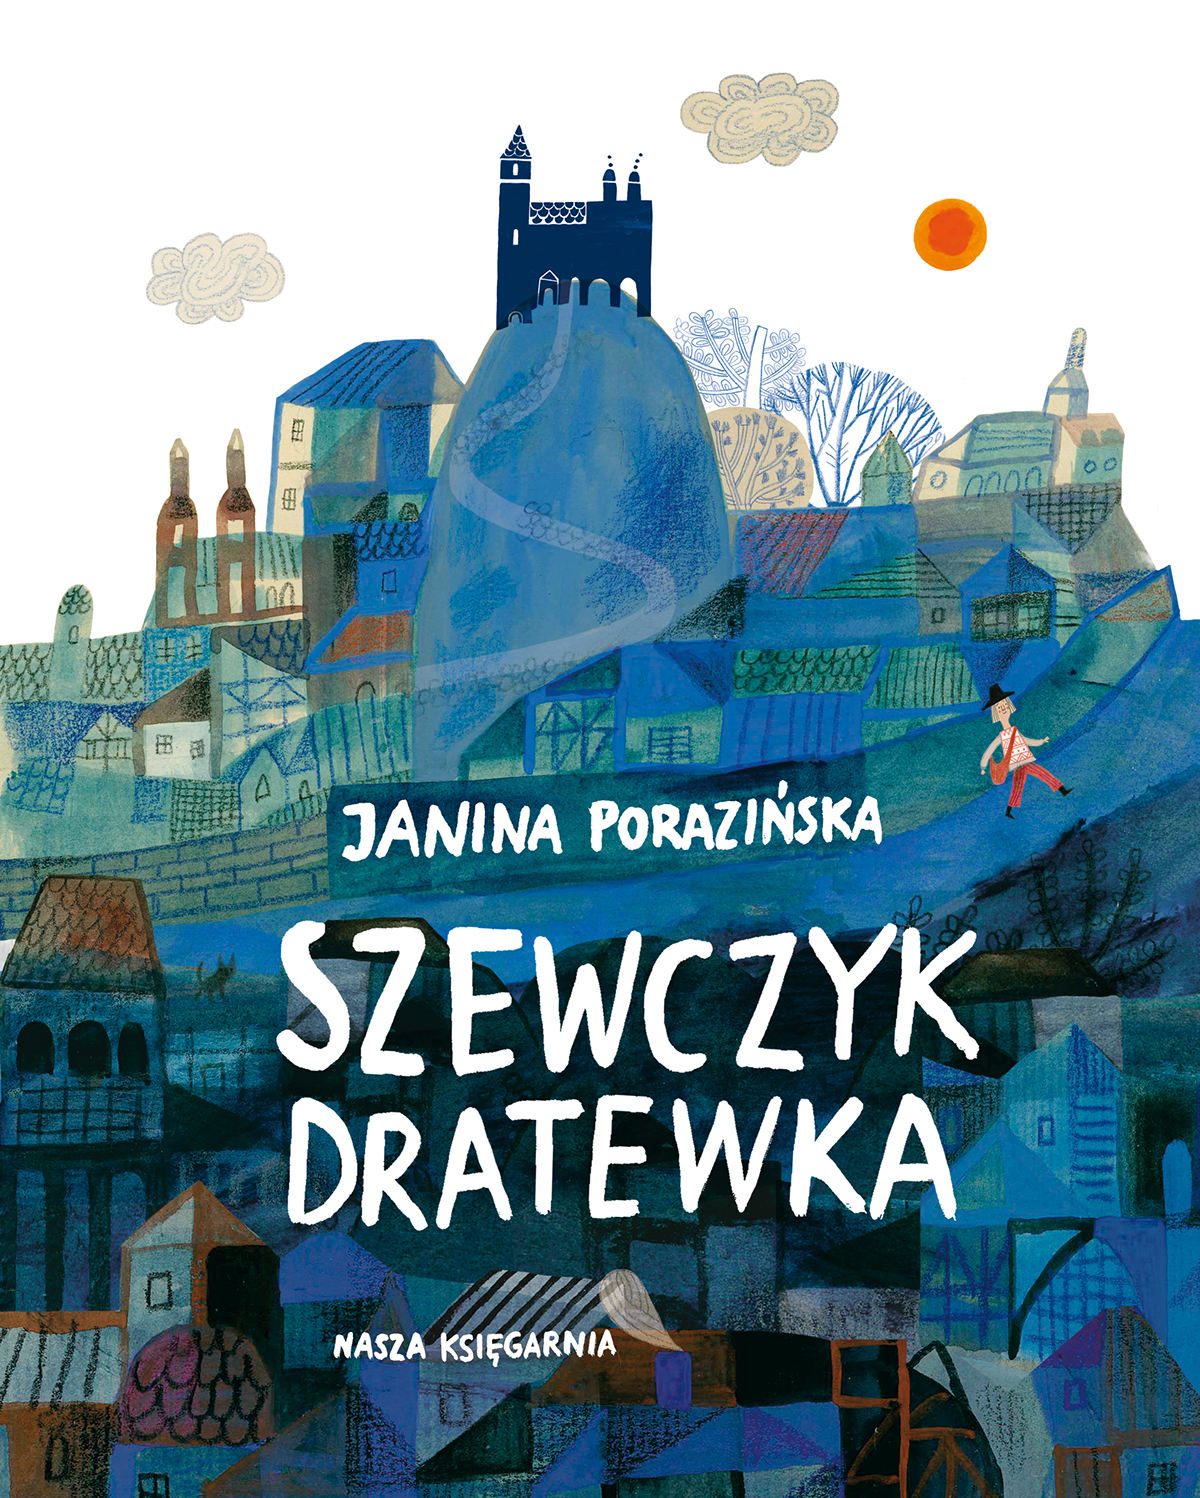 Szewczyk Dratewka" on Behance